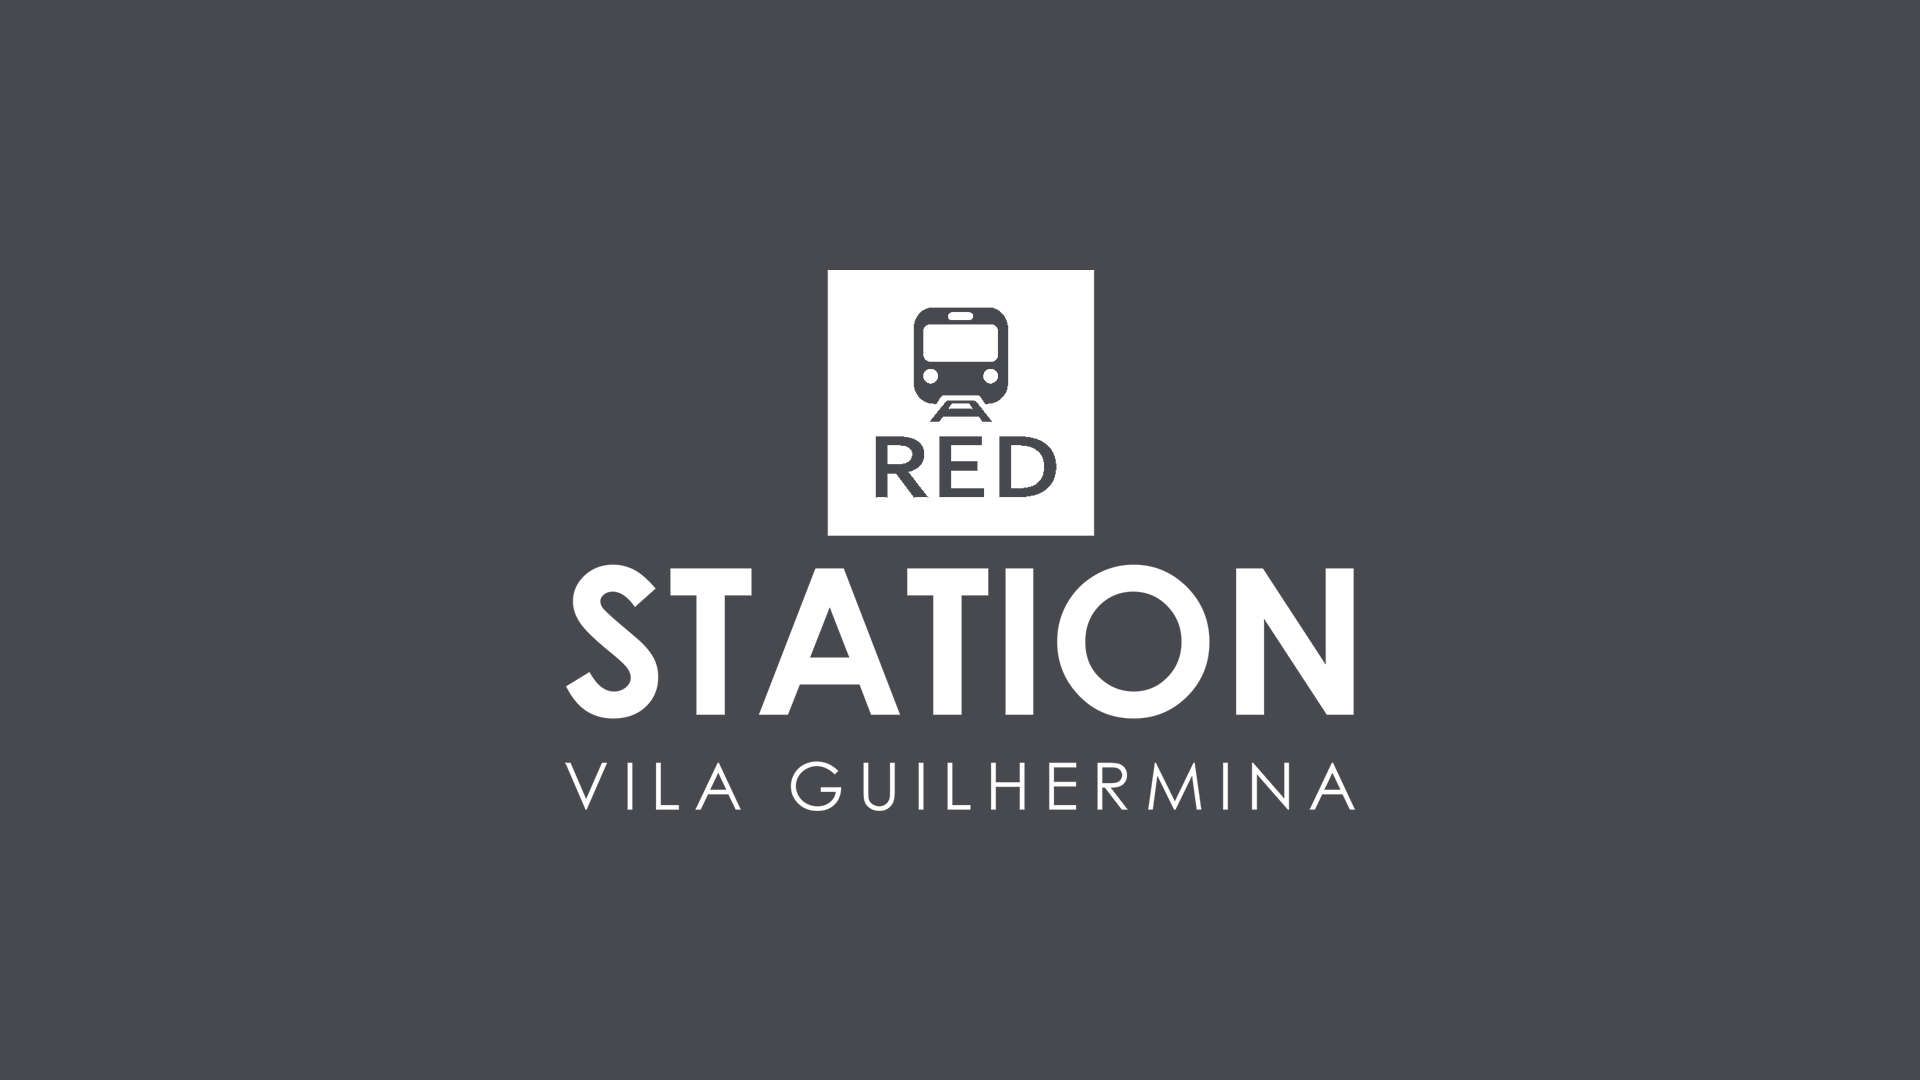 Red Station Vila Guilhermina — Lofts & Studios, Aptos 01 / 02 Dorms.